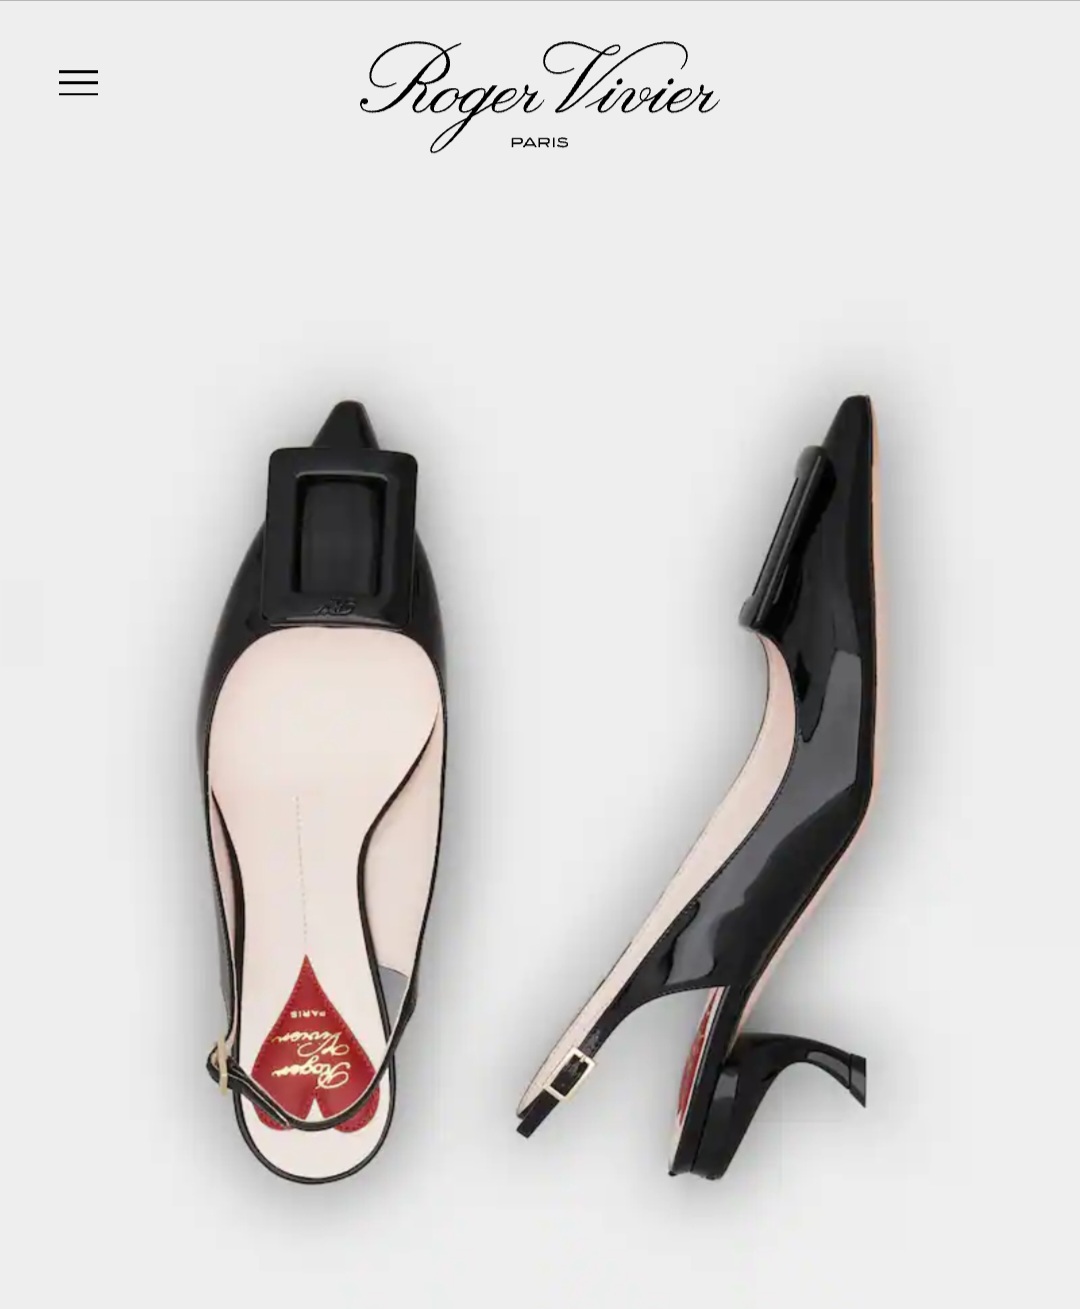 Roger Vivier Virgule Lacquered Buckle Slingback Pumps in Patent Leather heels shoe